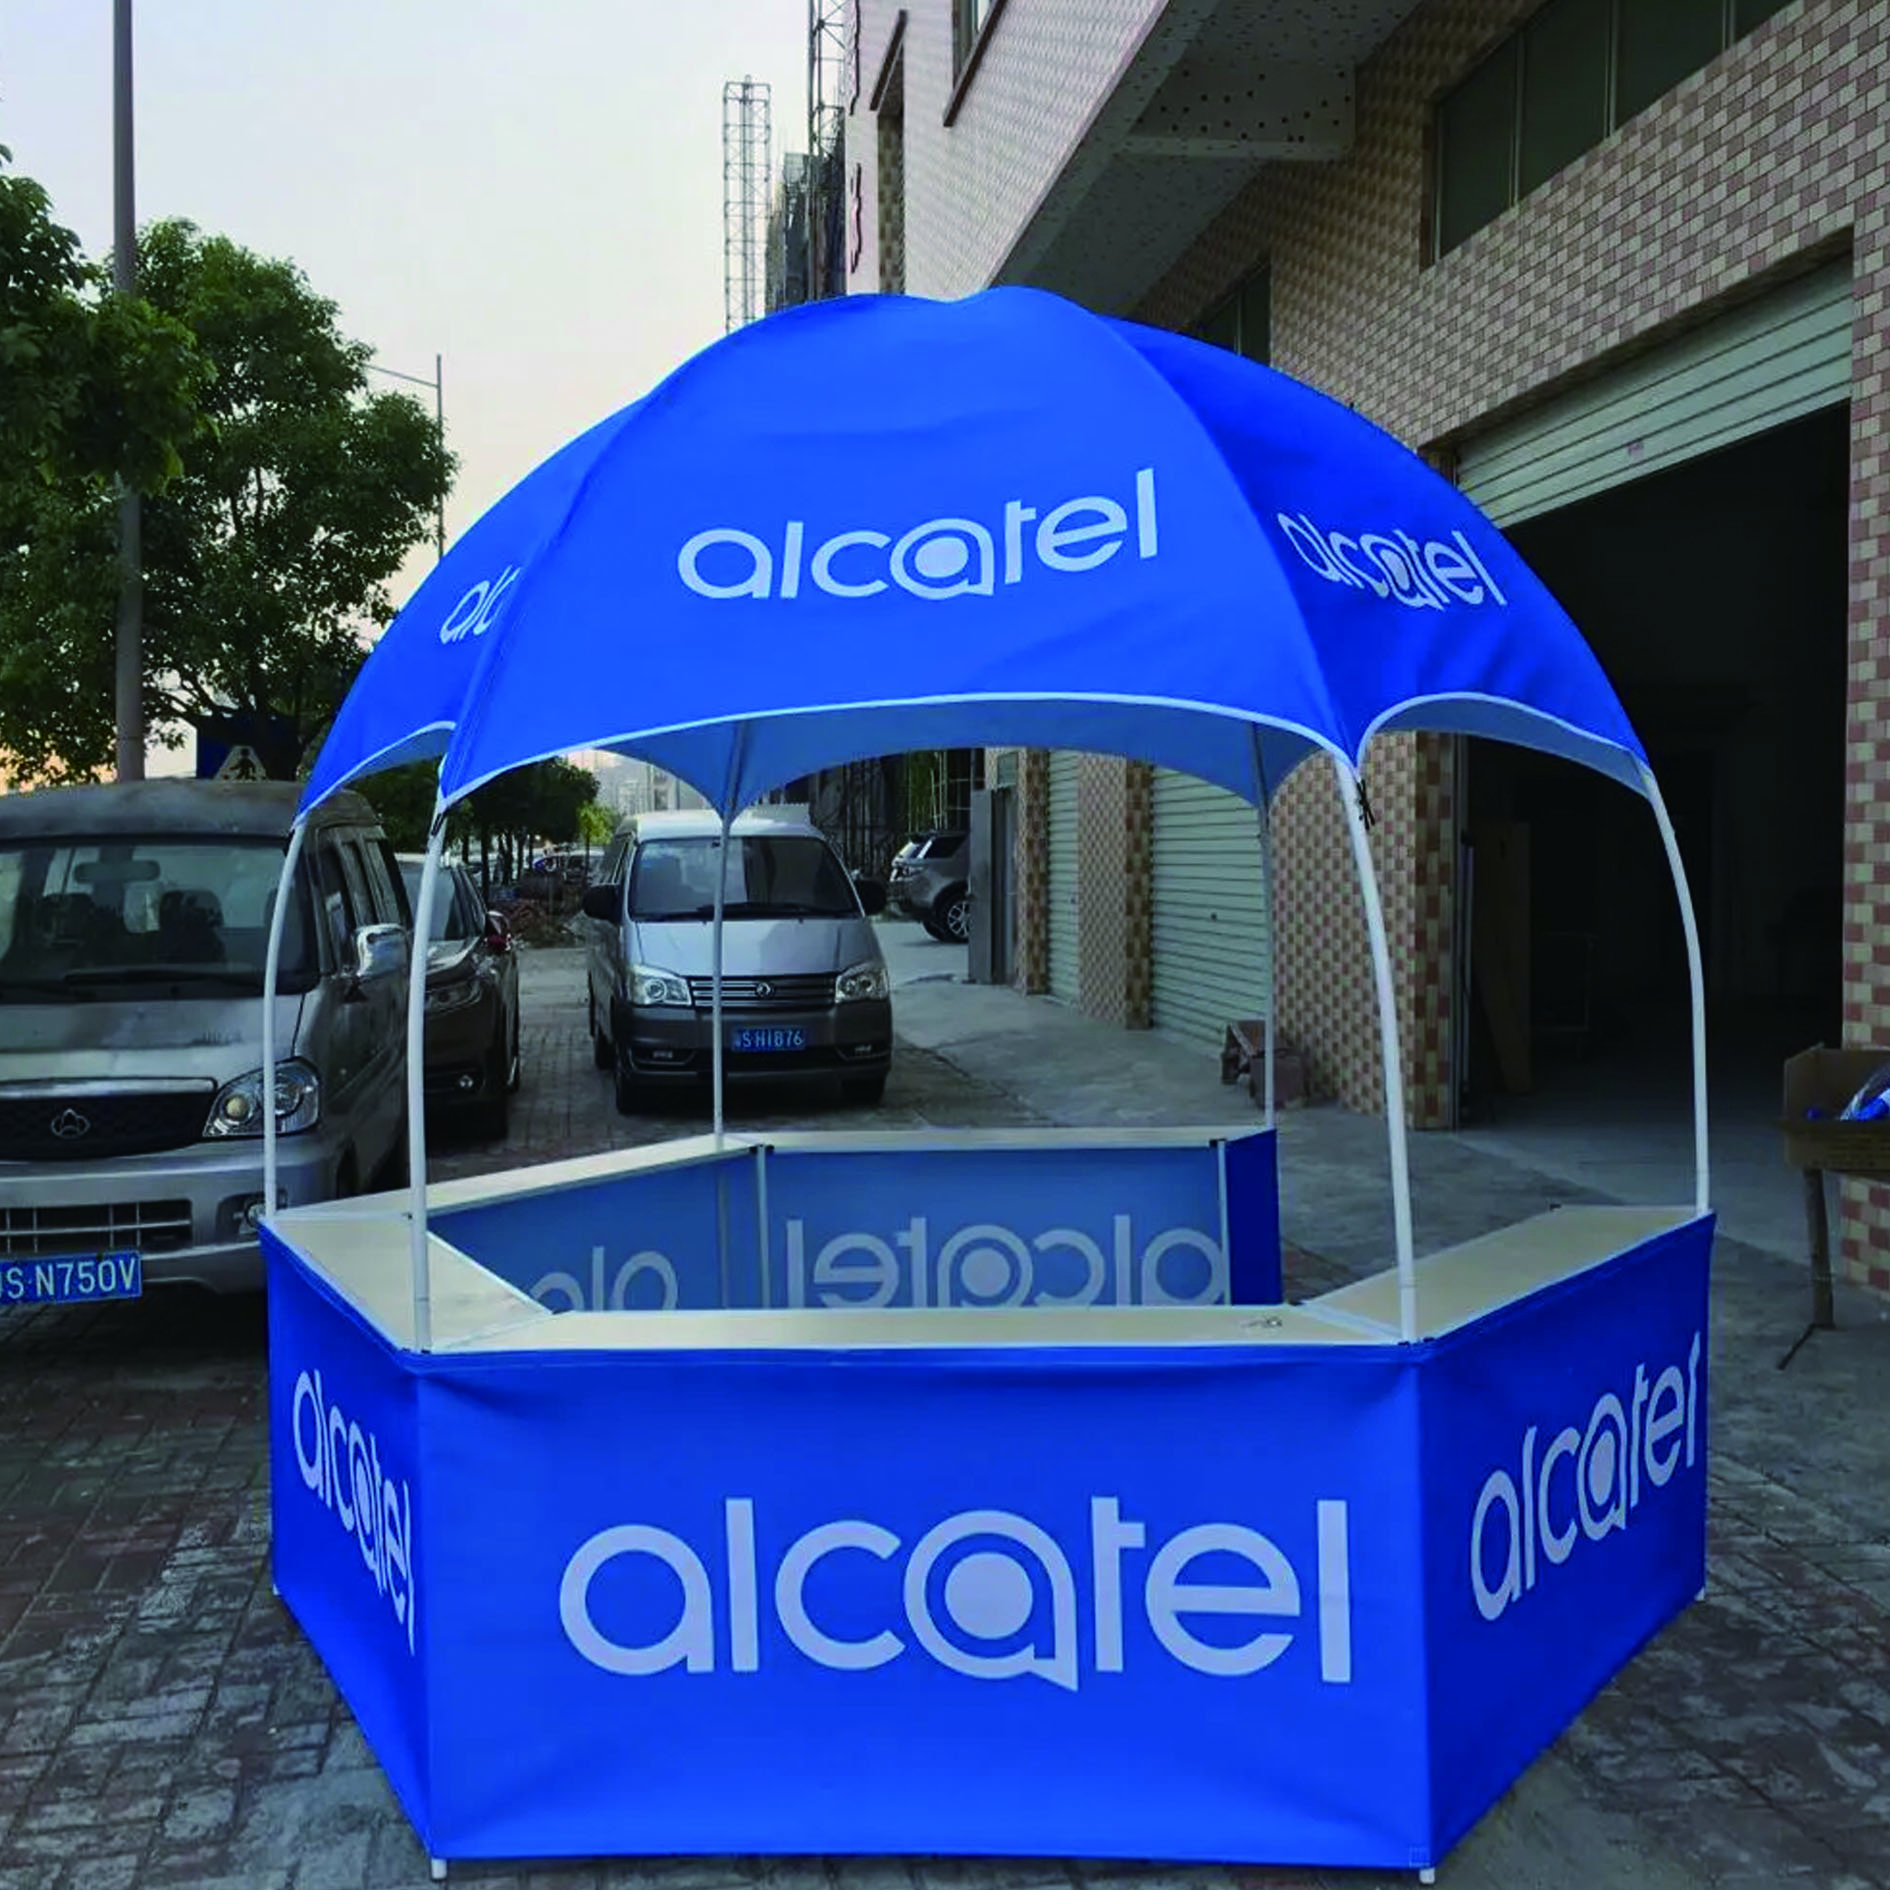 Outdoor canopy tent circular hexagonal canopy tent advertising display convenient tent promotion platform experience platform